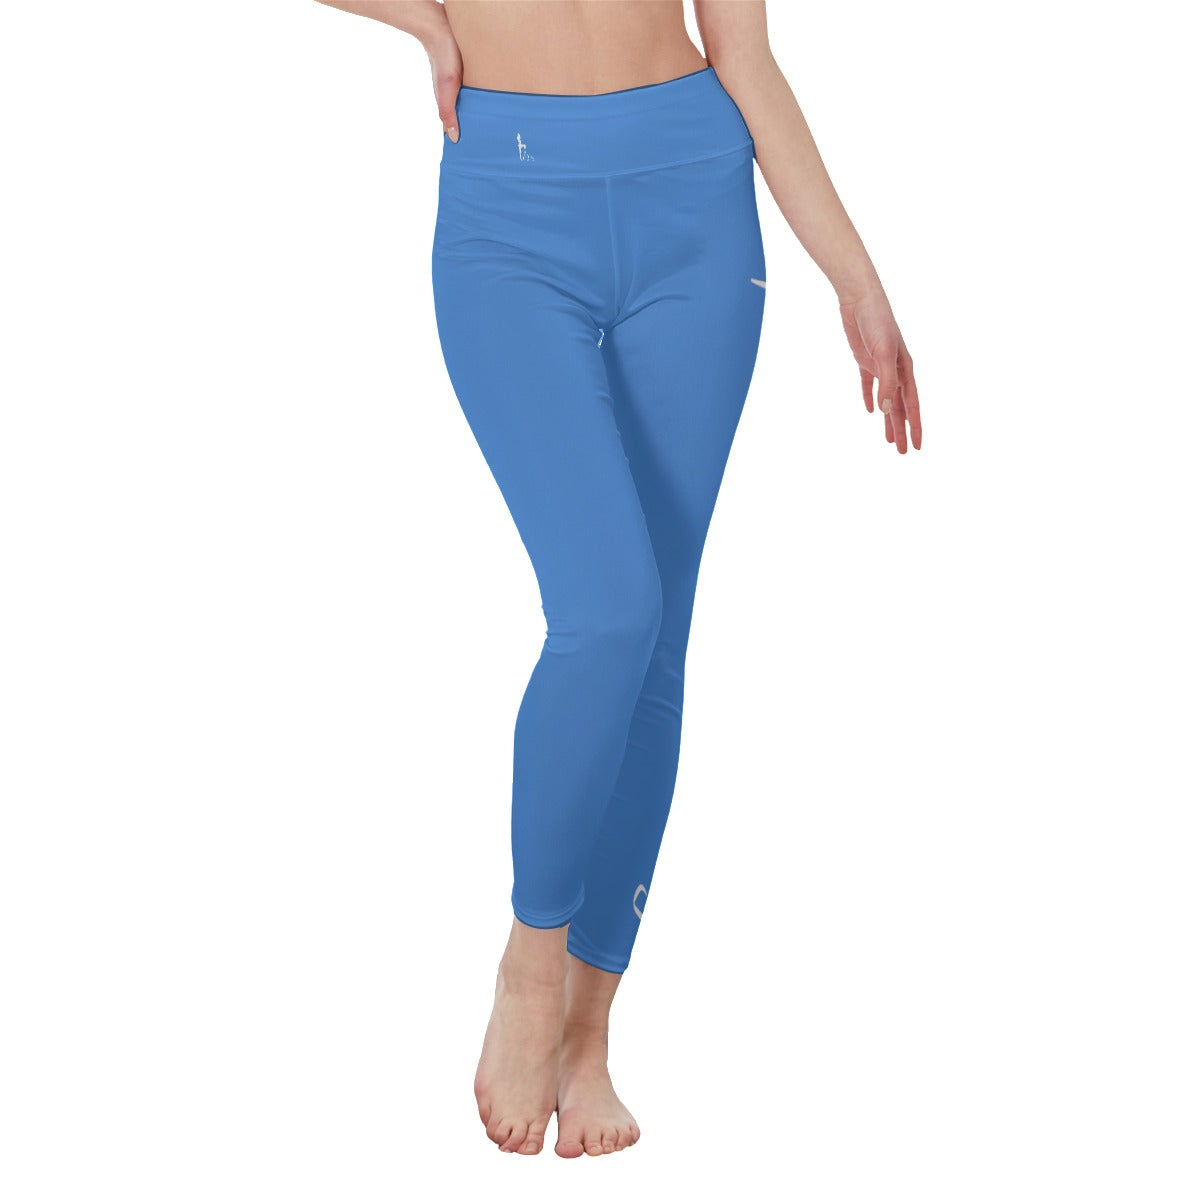 👖 Oficialmente Sexy Colors Collection Cornflower Blue With White Logo Women's High Waist Leggings Color #4A90E2 👖